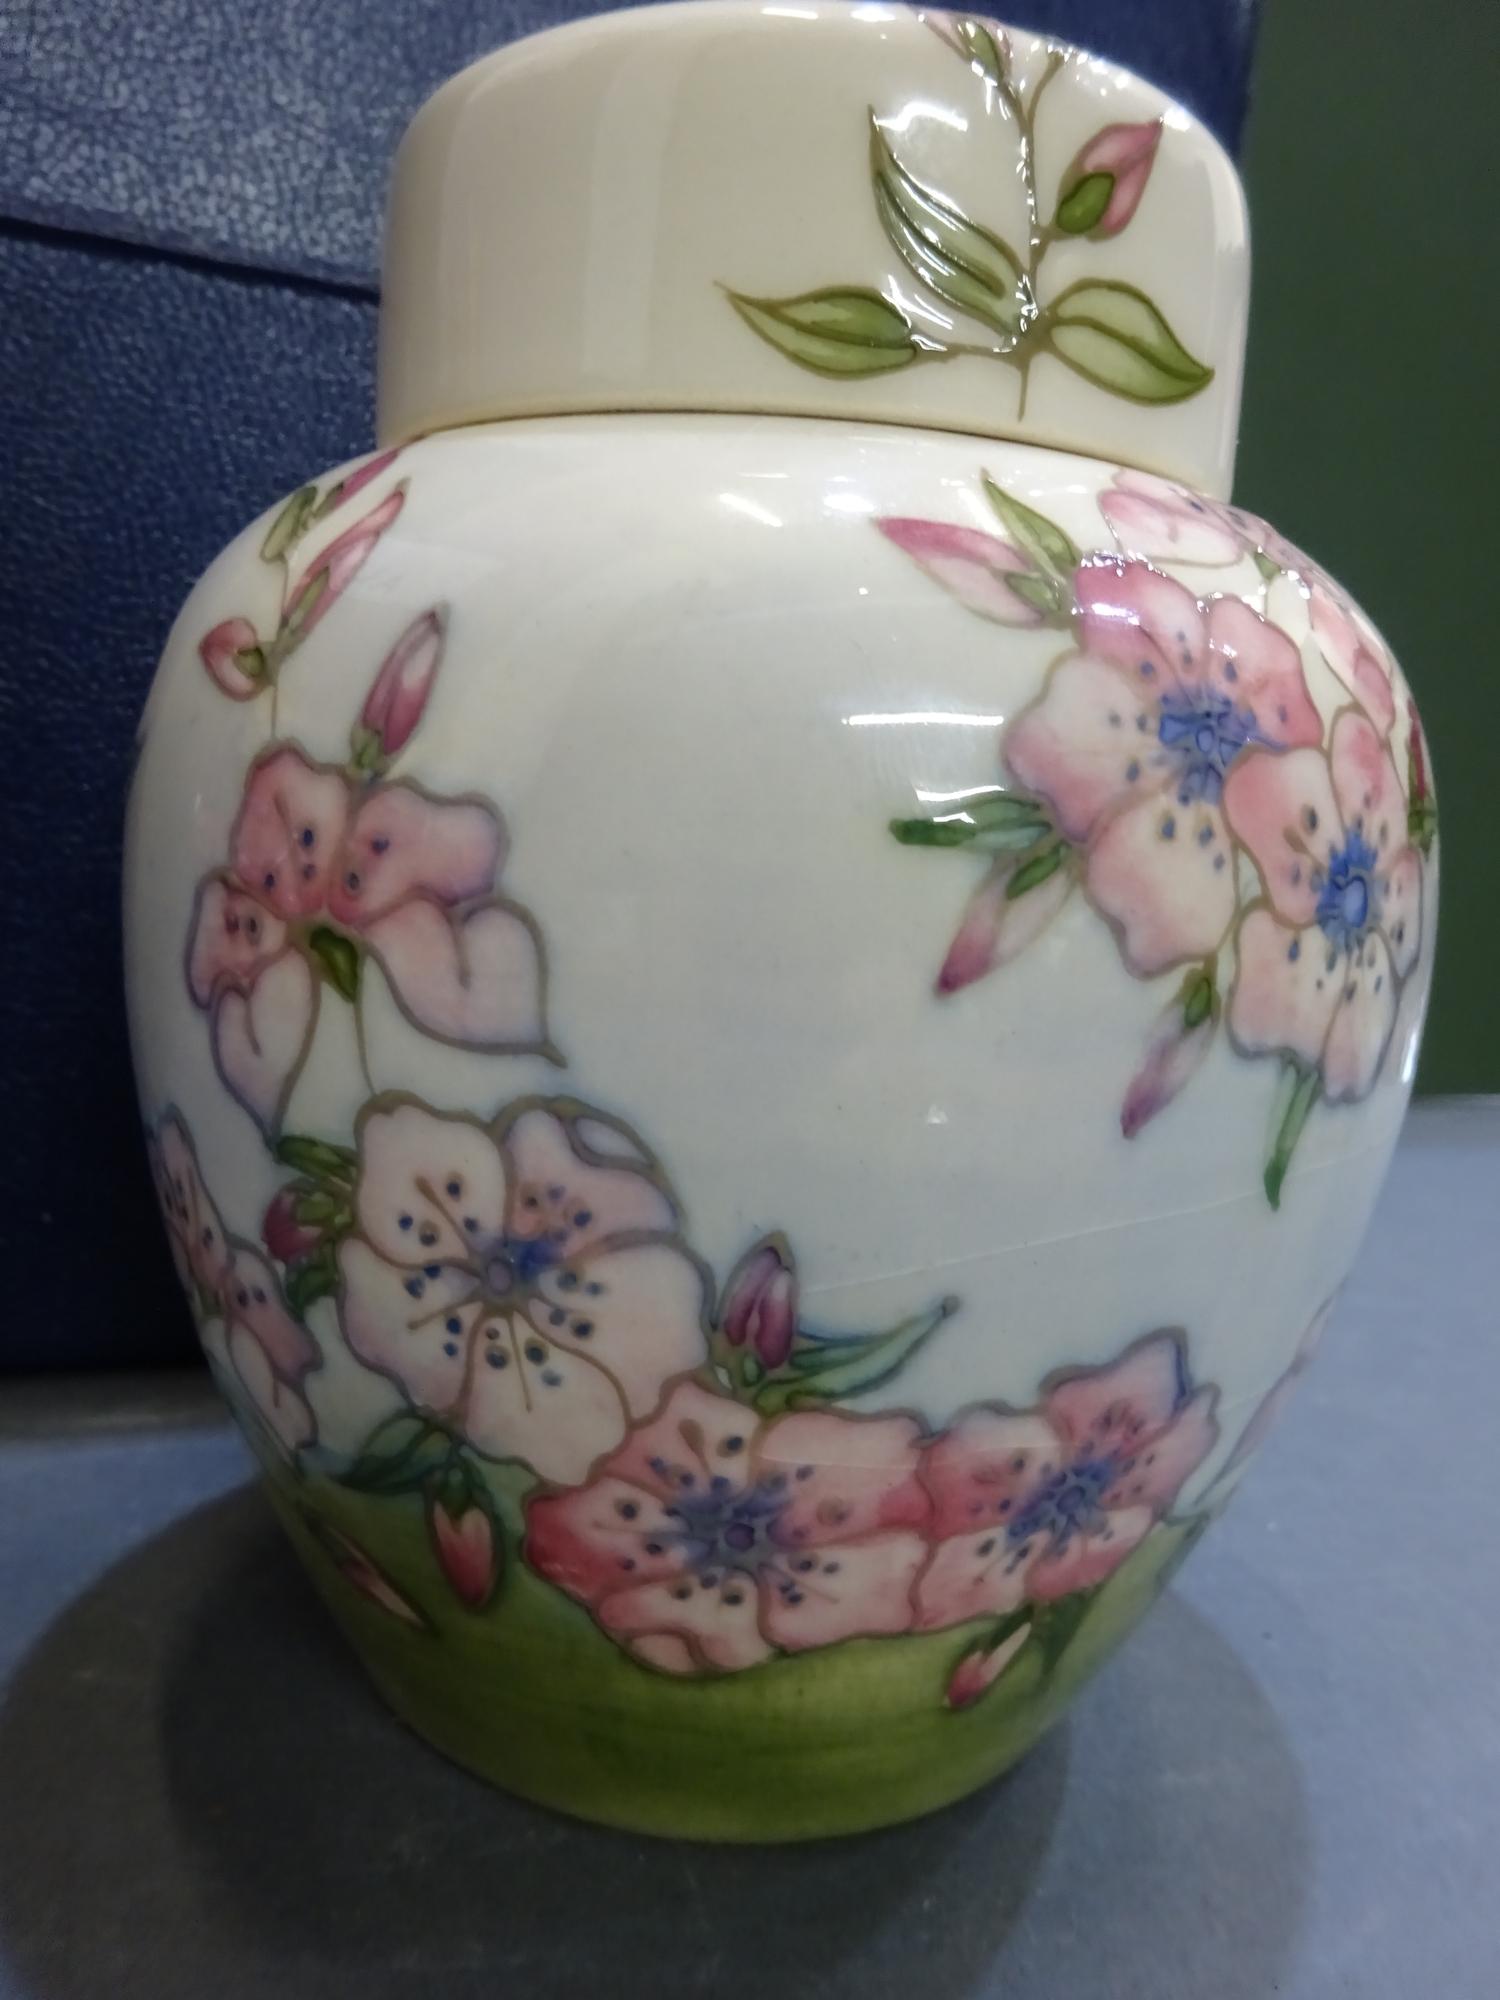 Moorcroft ginger jar 'spring blossom' pattern, after Sally Tuffin, by Jennifer James - Image 3 of 6